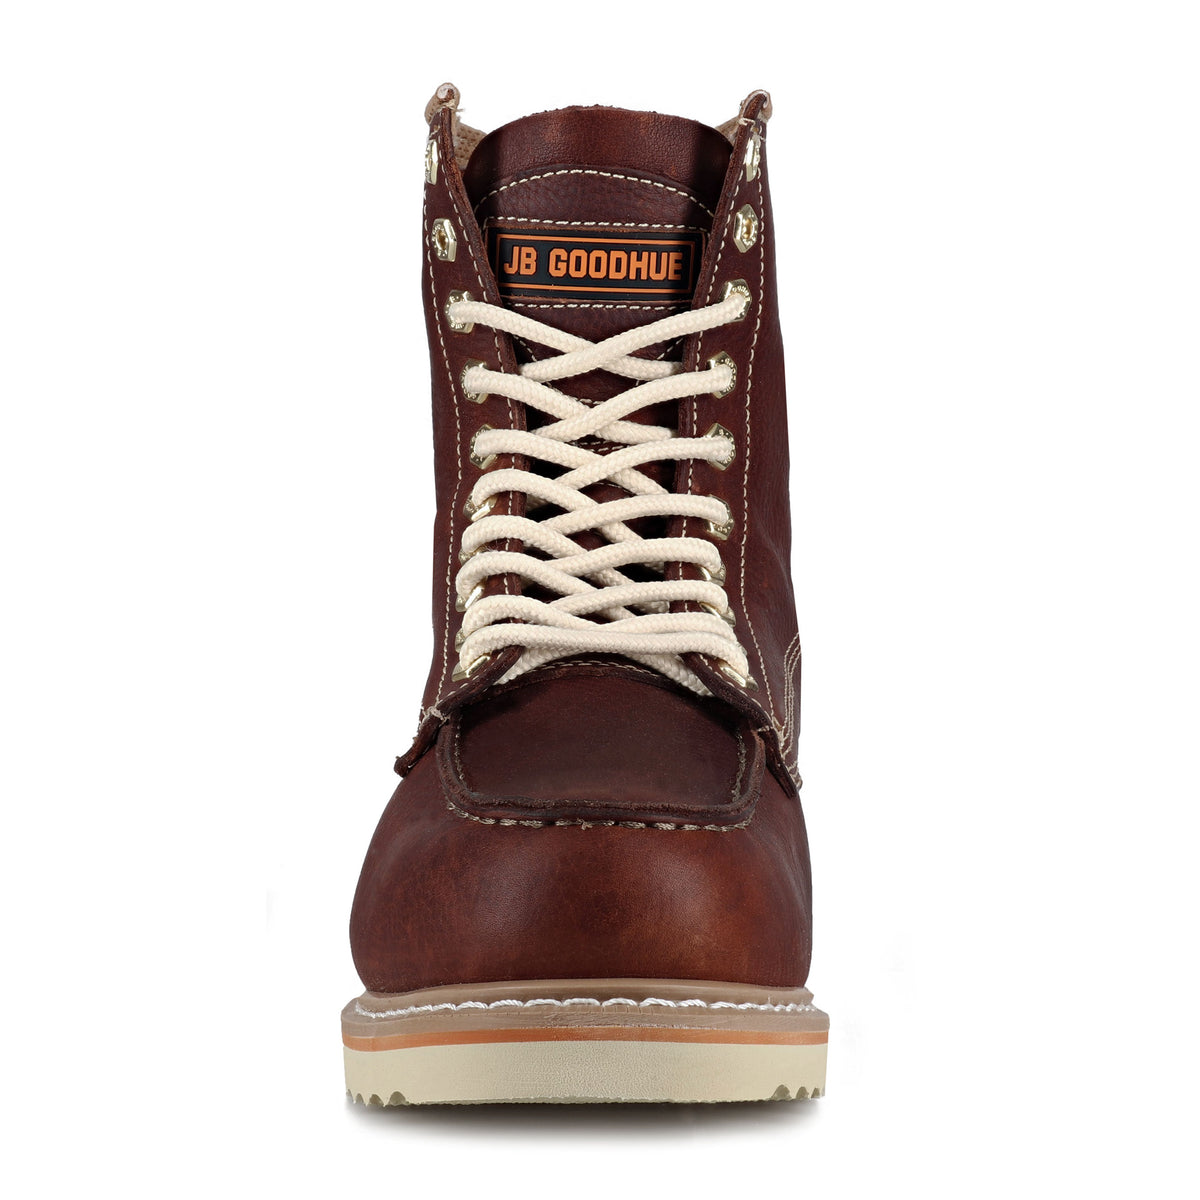 Jb Goodhue Farmer2 00744 Brown Shoes